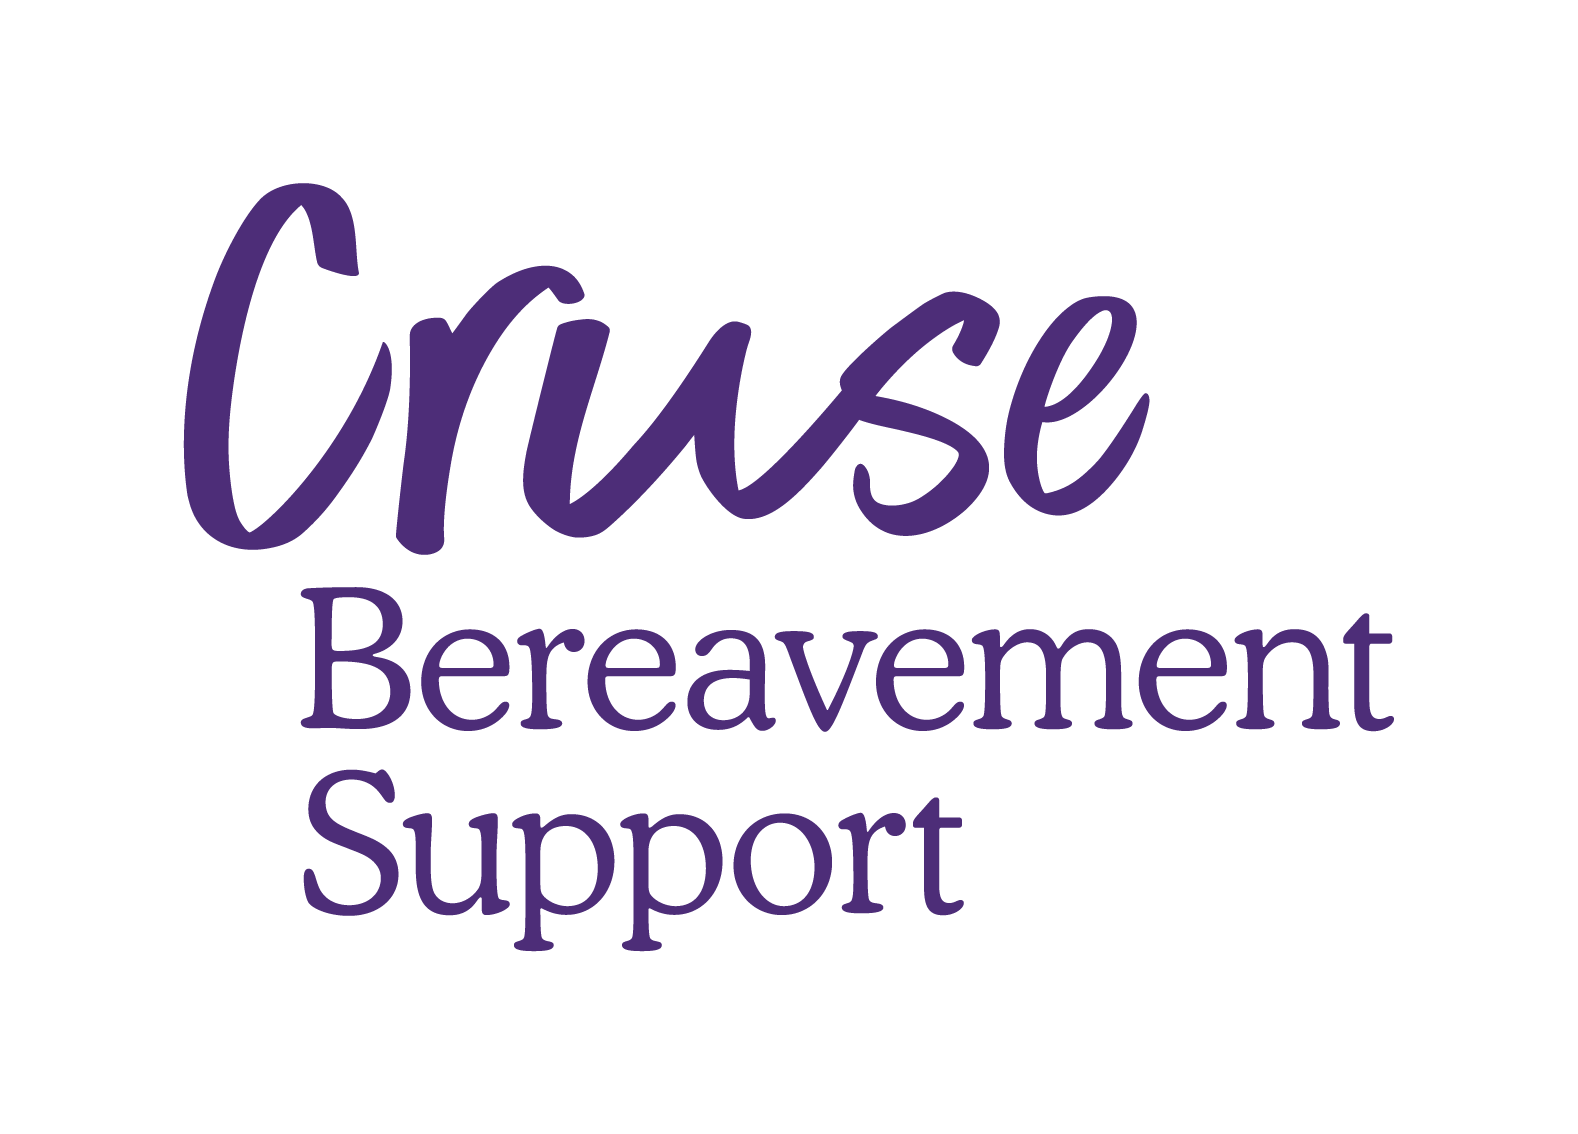 Cruse support logo